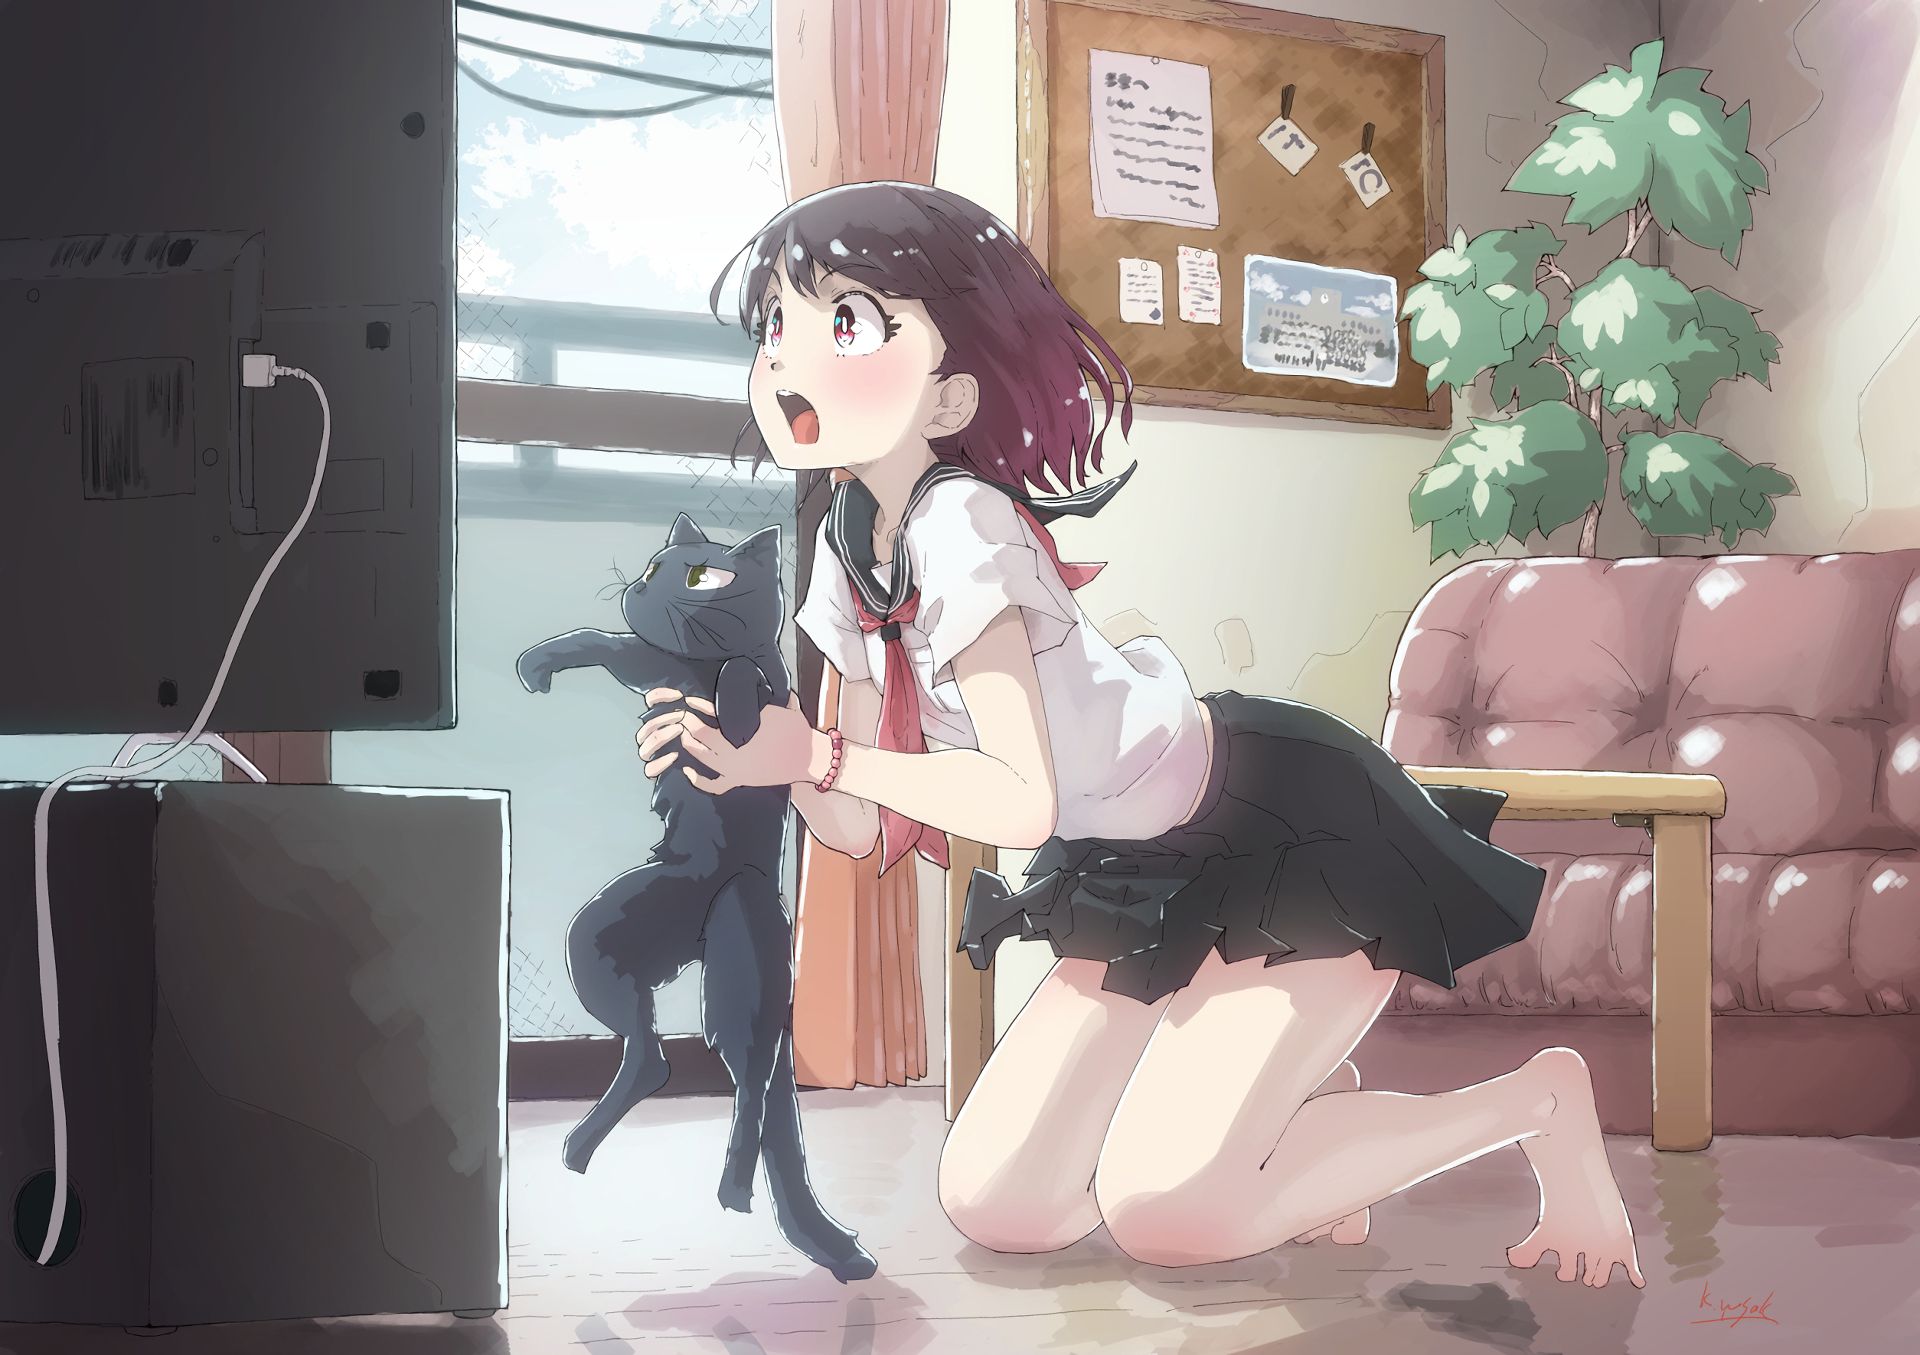 Chicas gatos anime